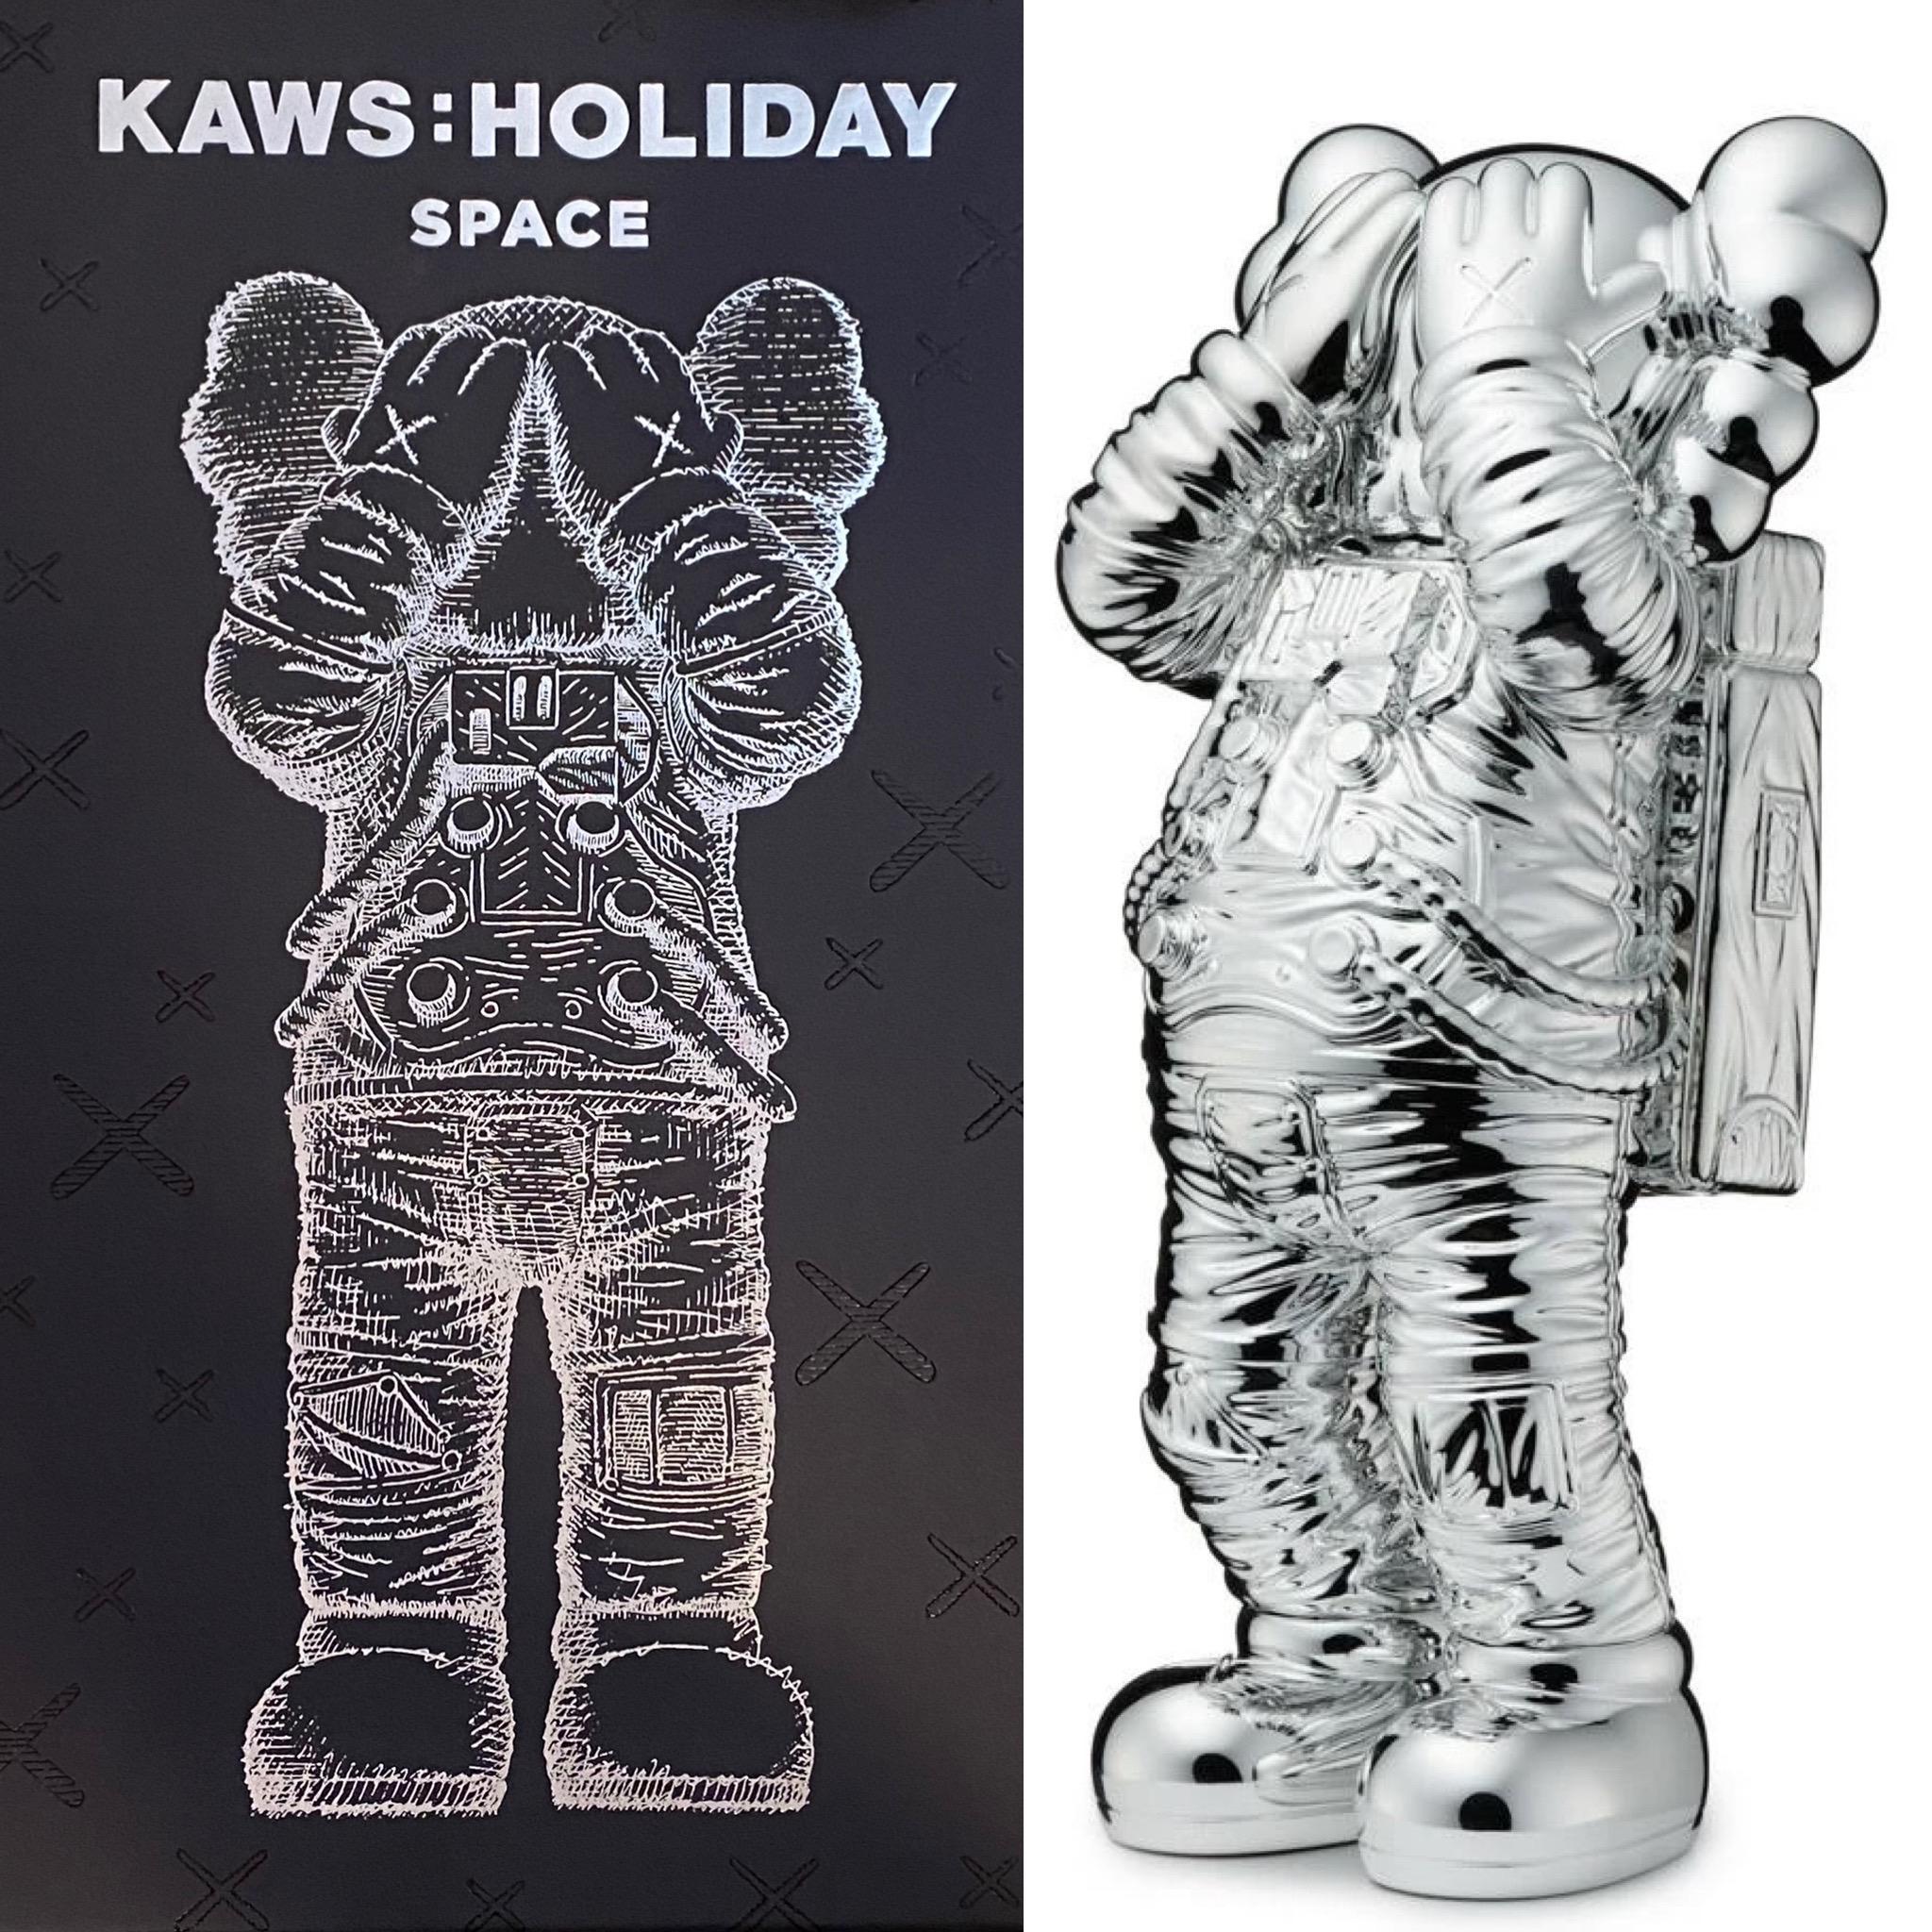 Kaws Space Holiday - 18 For Sale on 1stDibs | kaws holiday space 